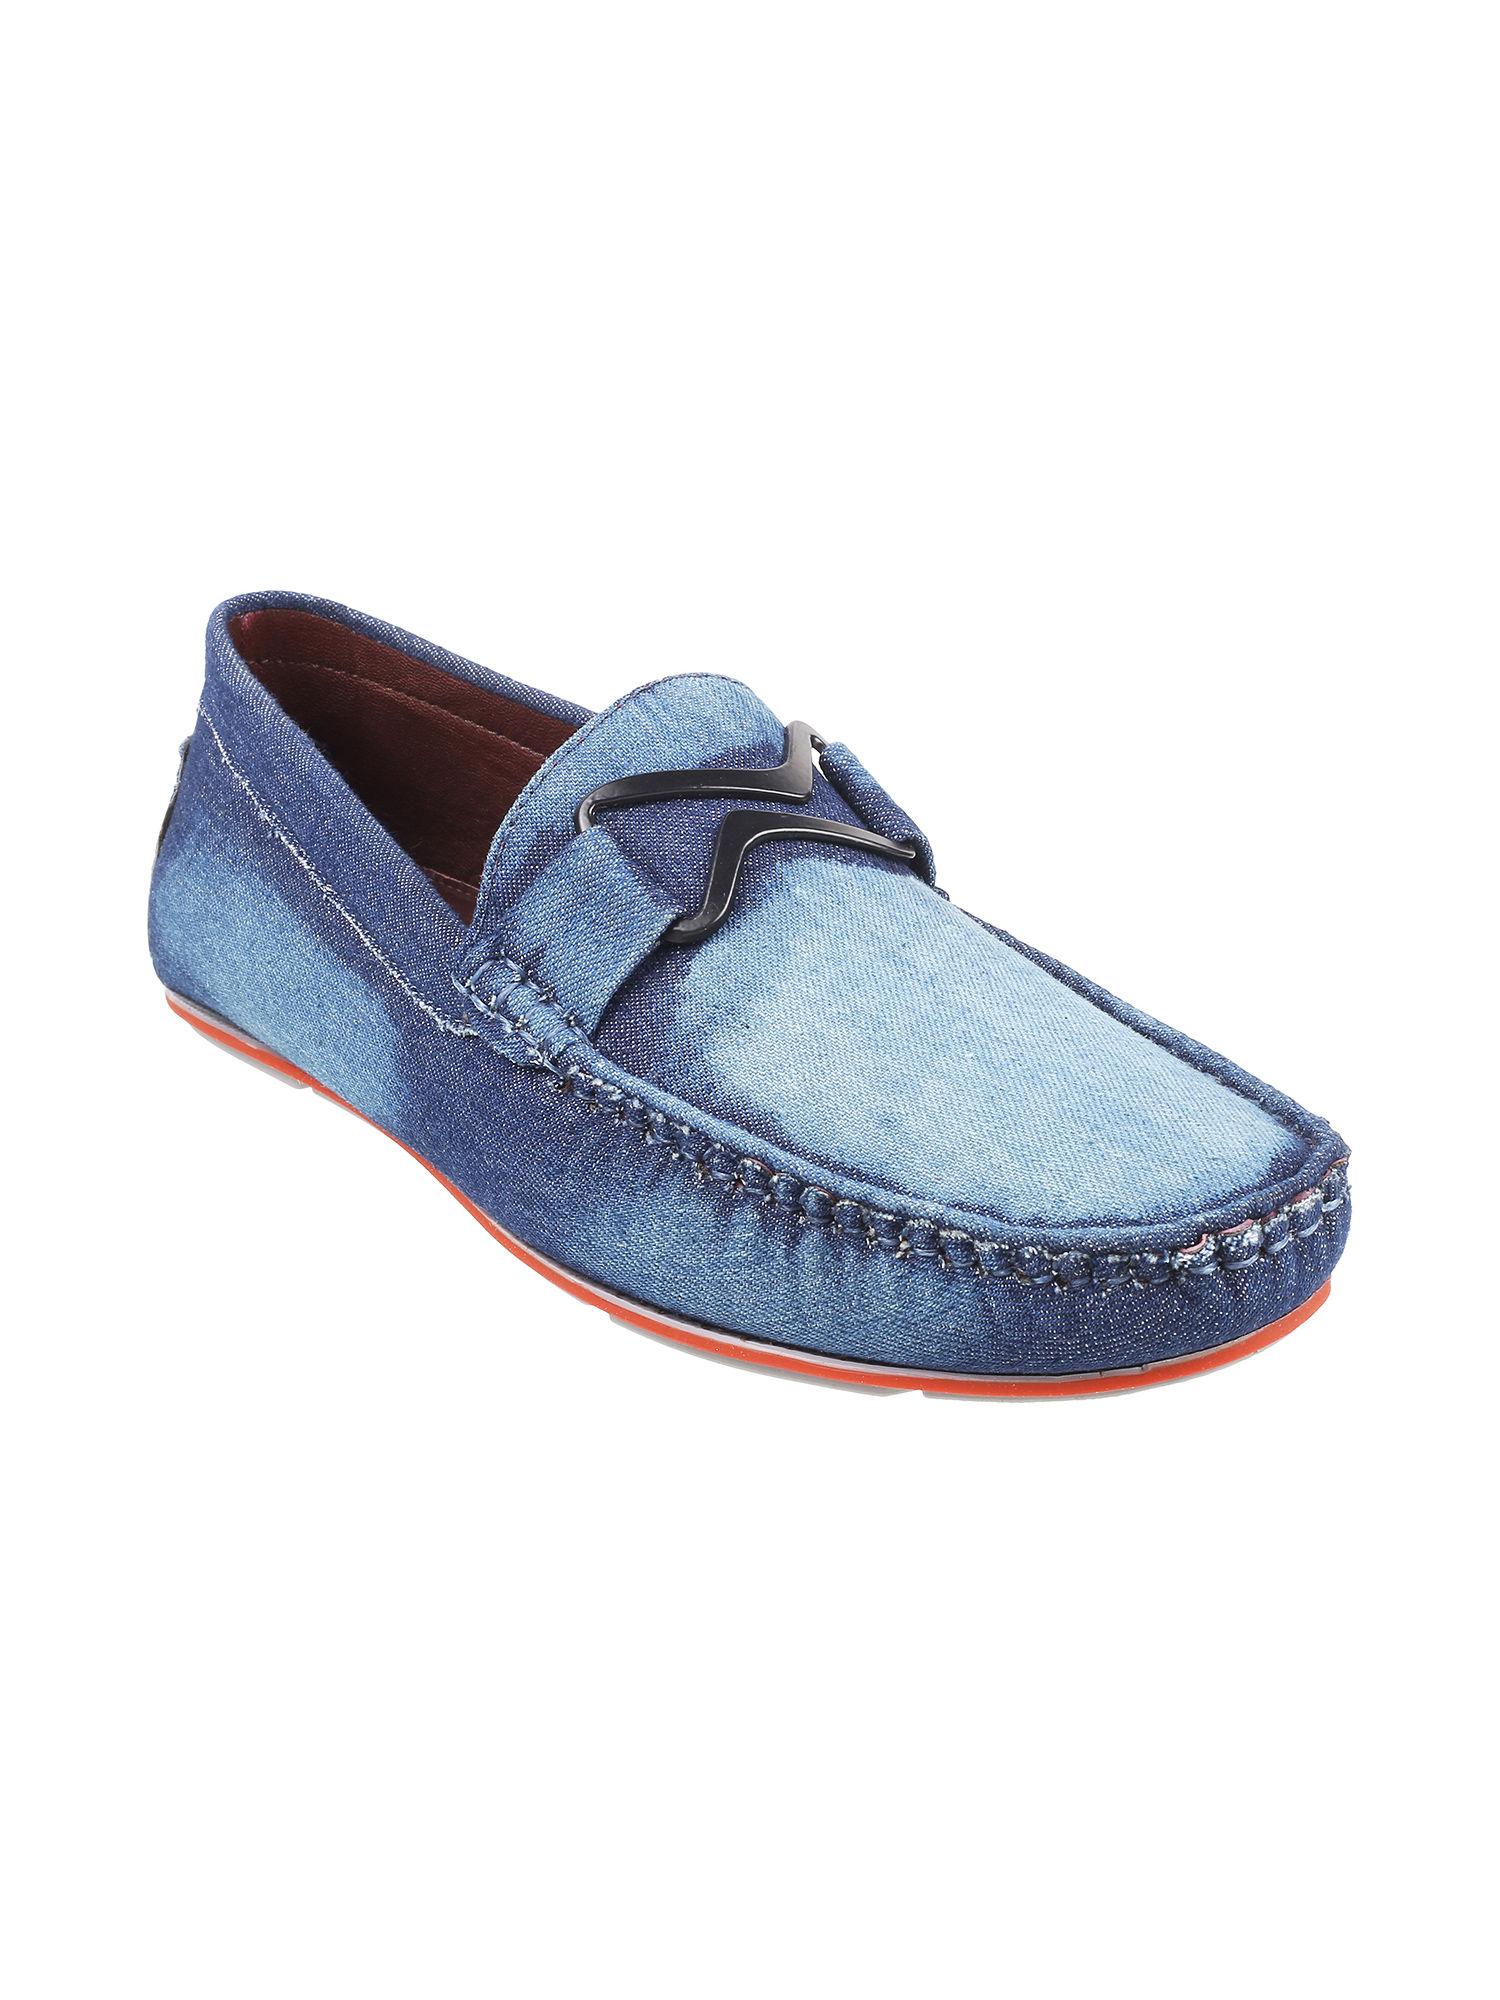 men suede blue loafers